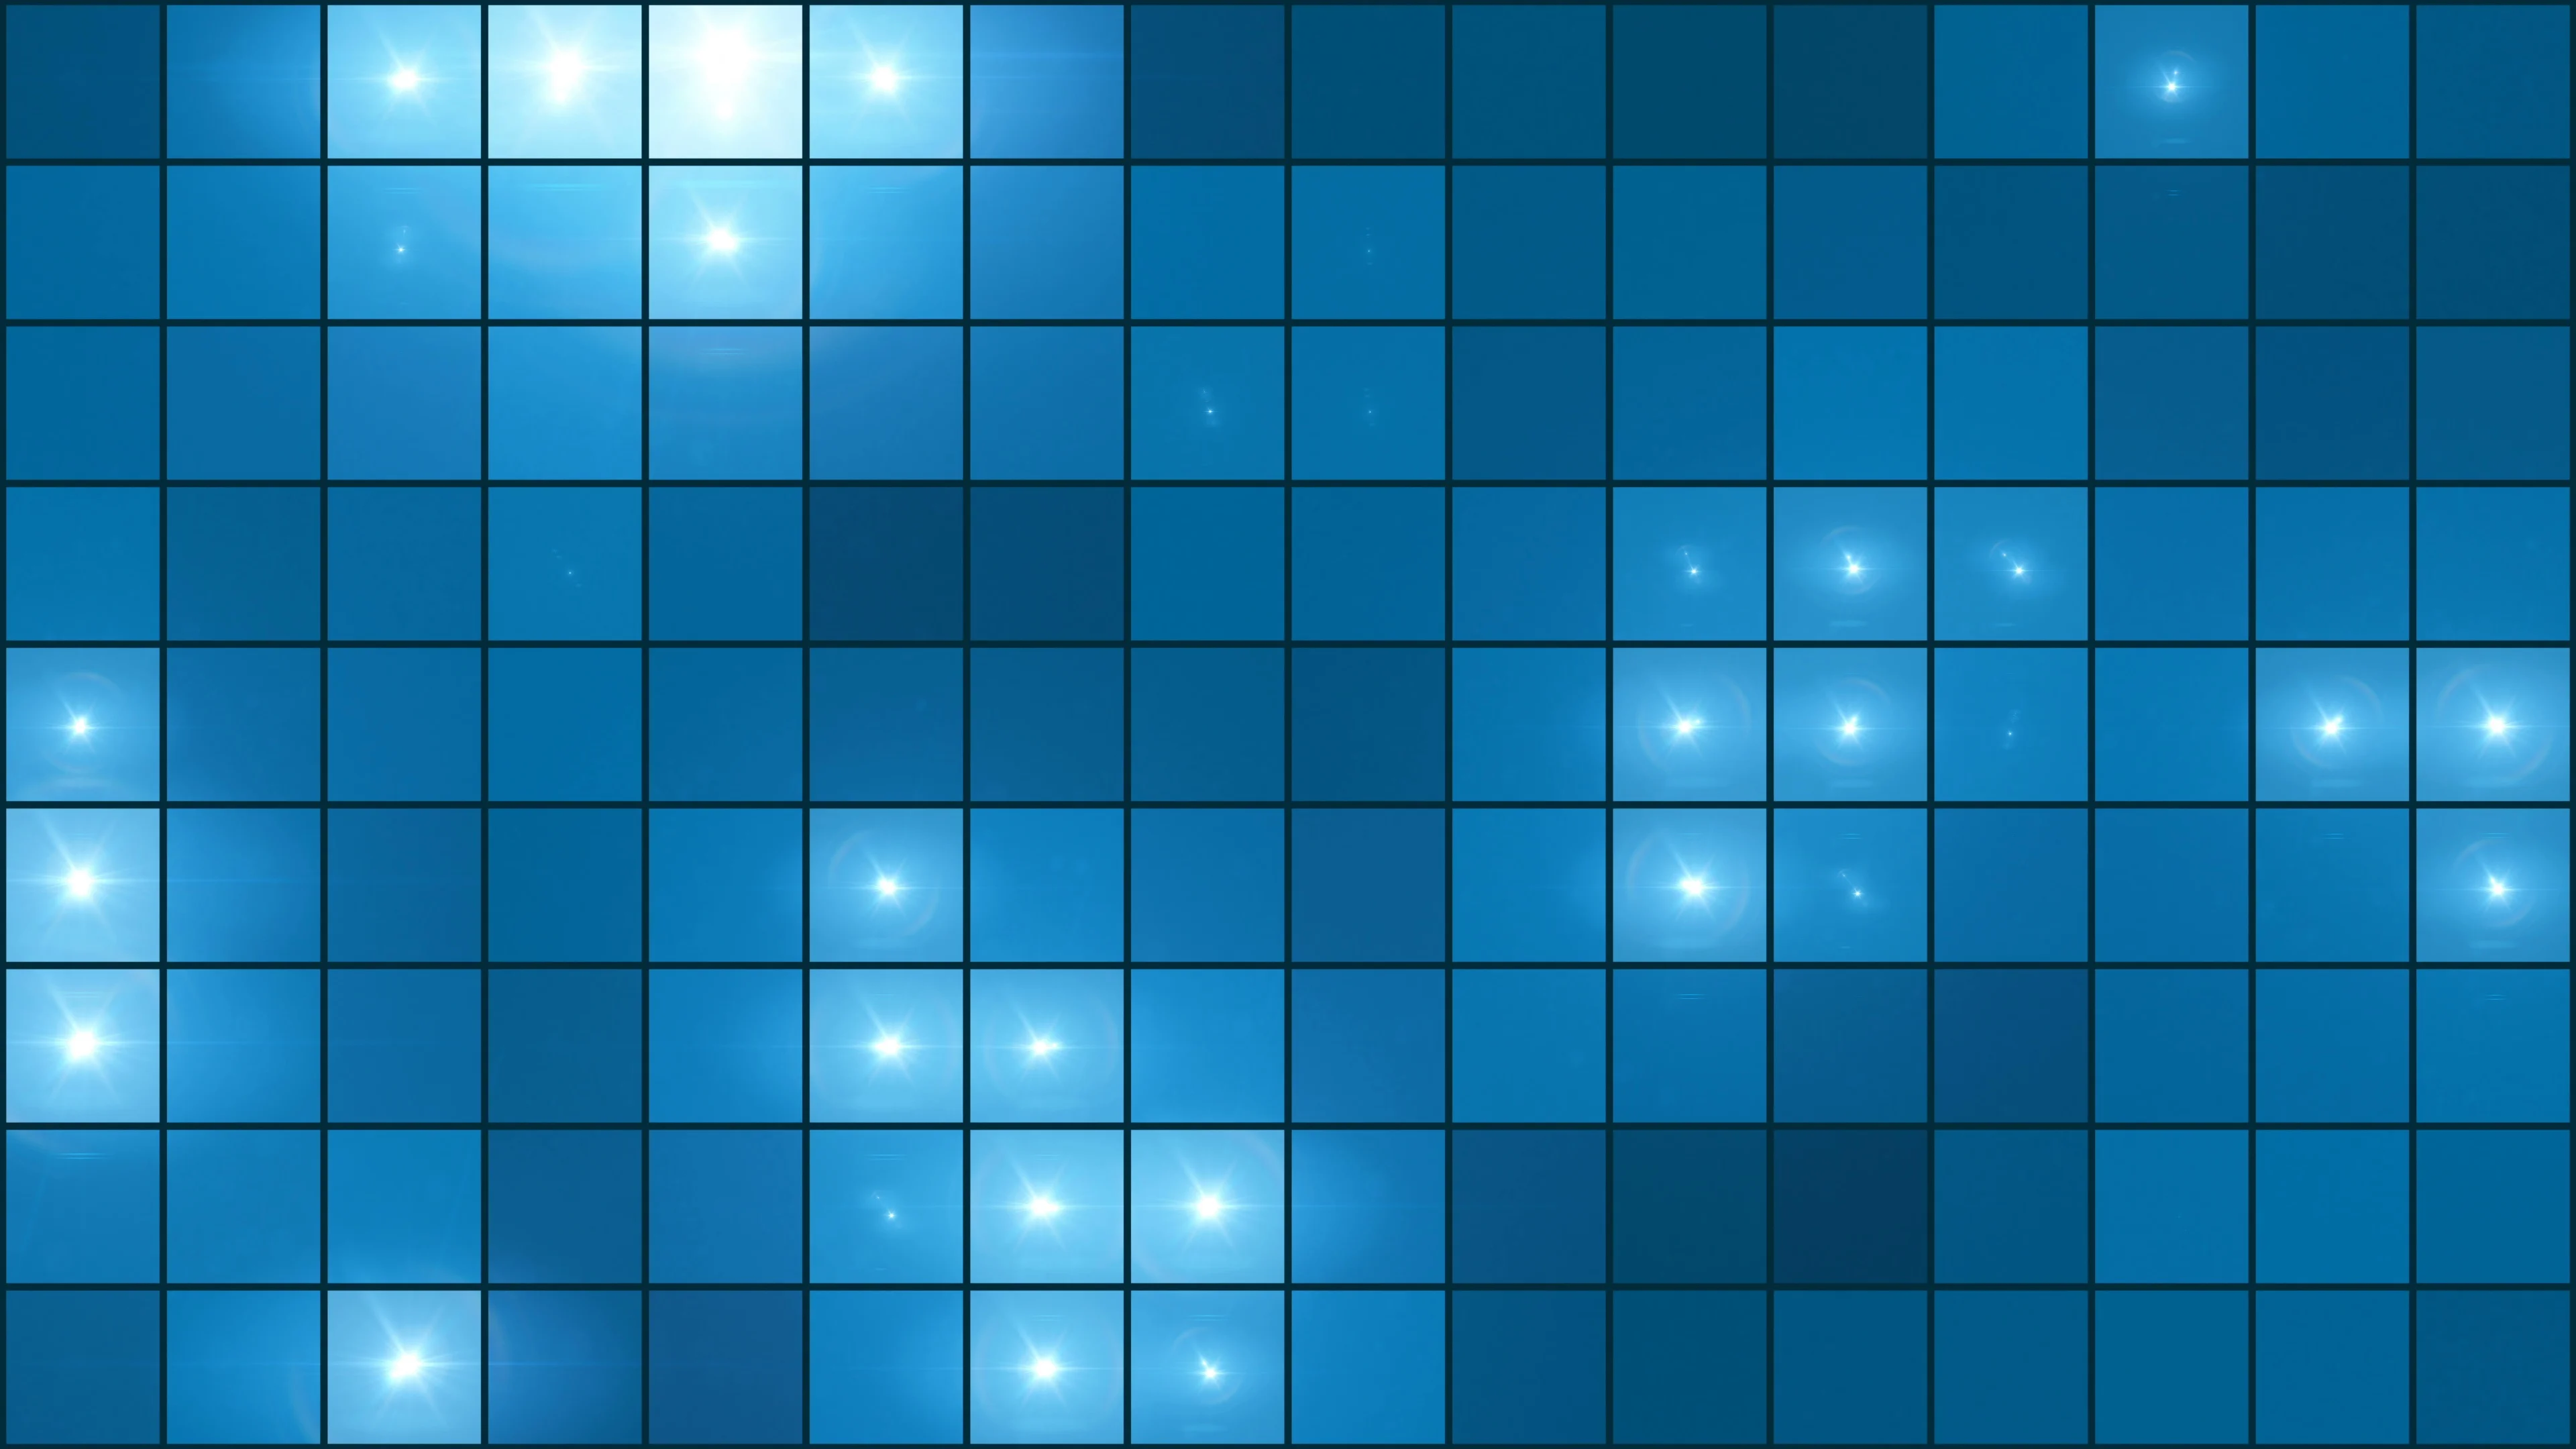 Mosaic Light Show Blue - 4k Illuminated ... | Stock Video | Pond5